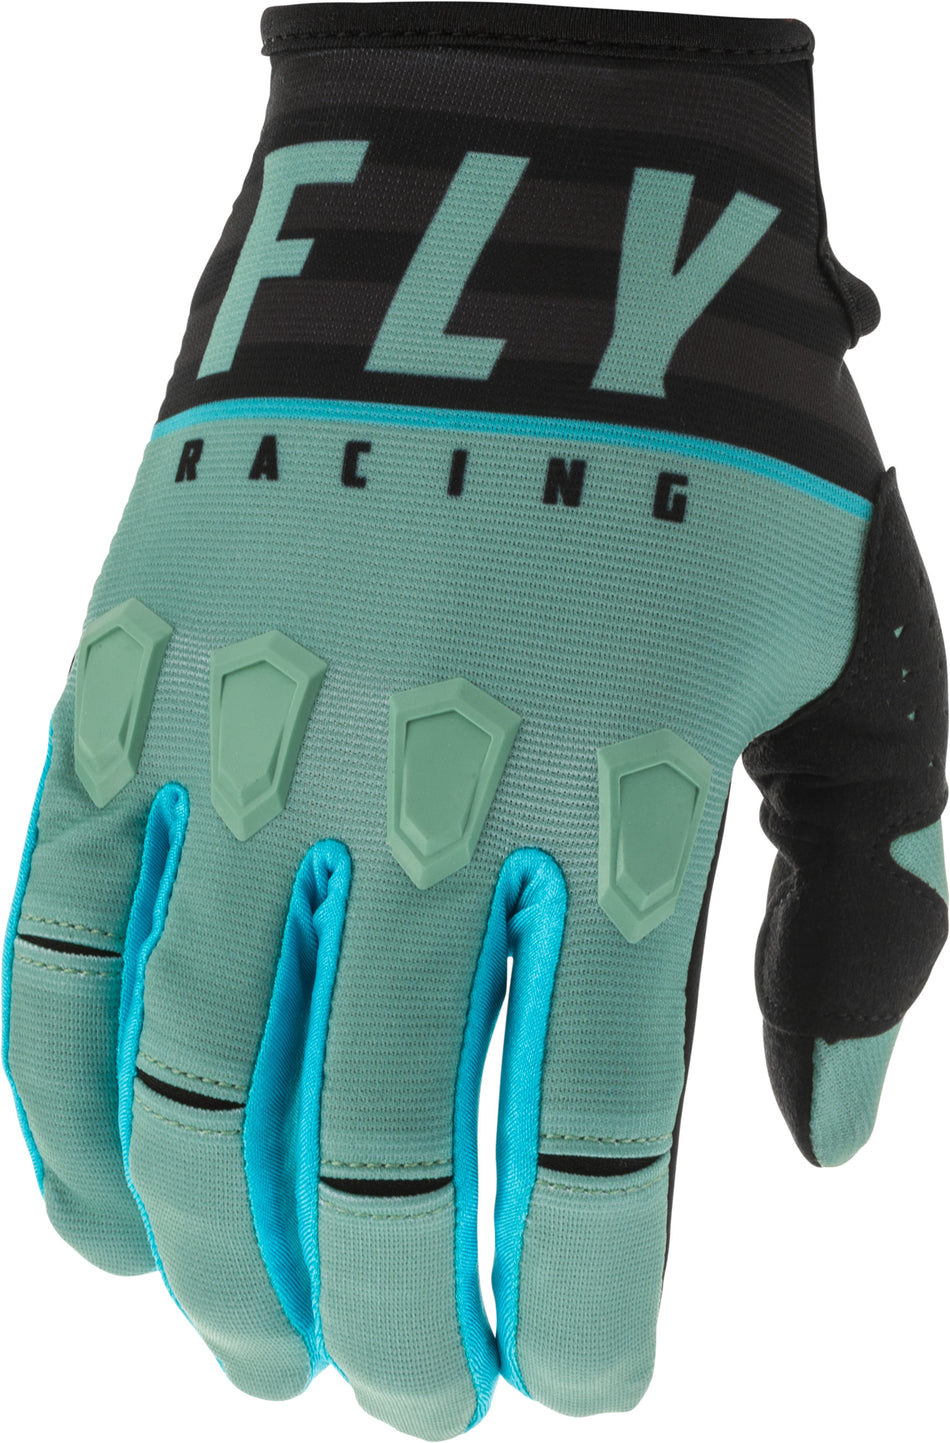 FLY RACING Kinetic K120 Gloves Sage Green/Black Sz 07 373-41607